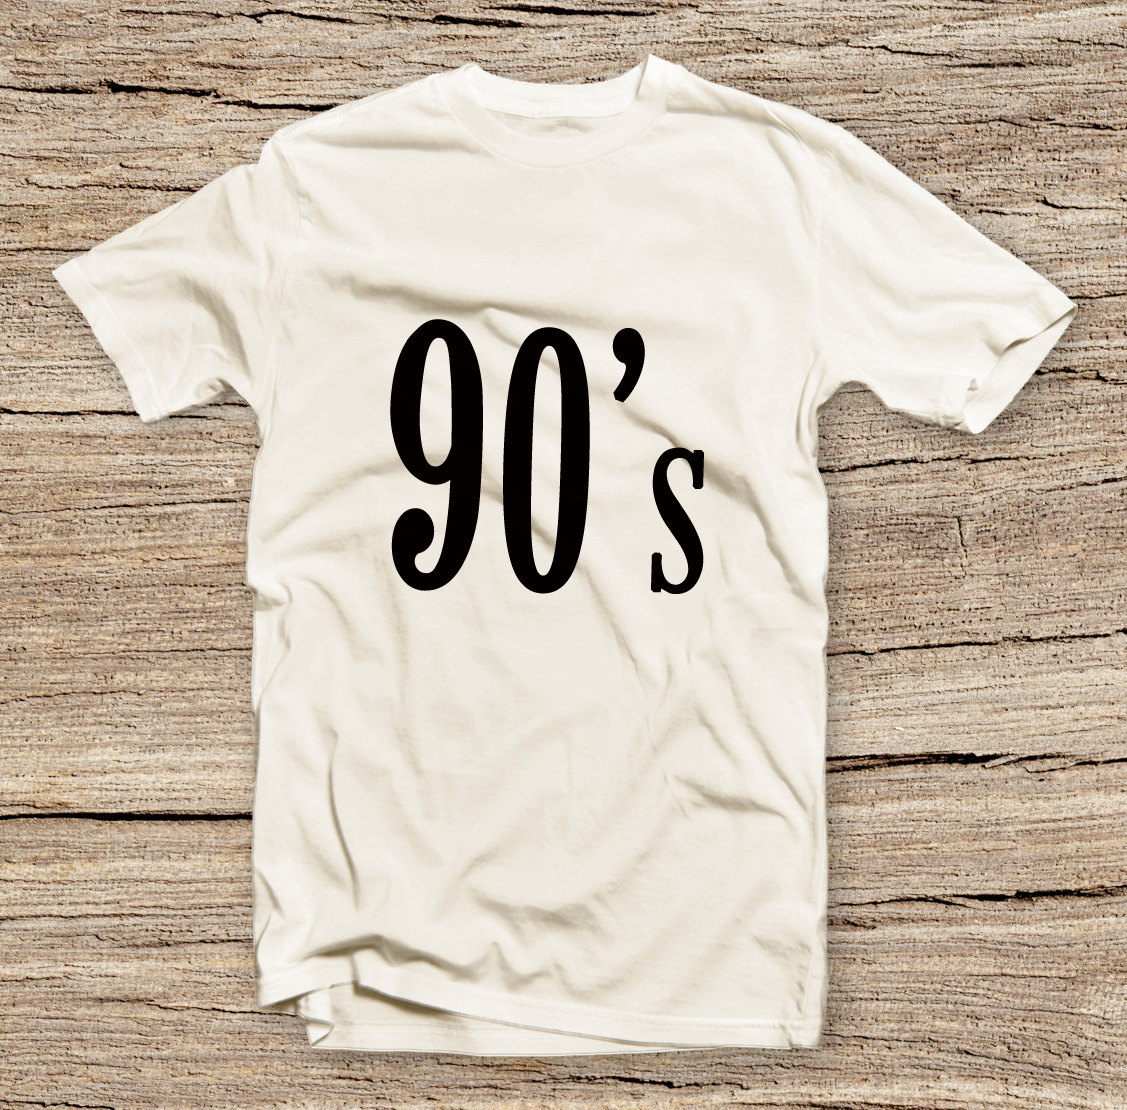 Pts-084 90's Tee, Mens Womans T-shirt, Couple T-shirt, Fashion Style Printed T-shirt